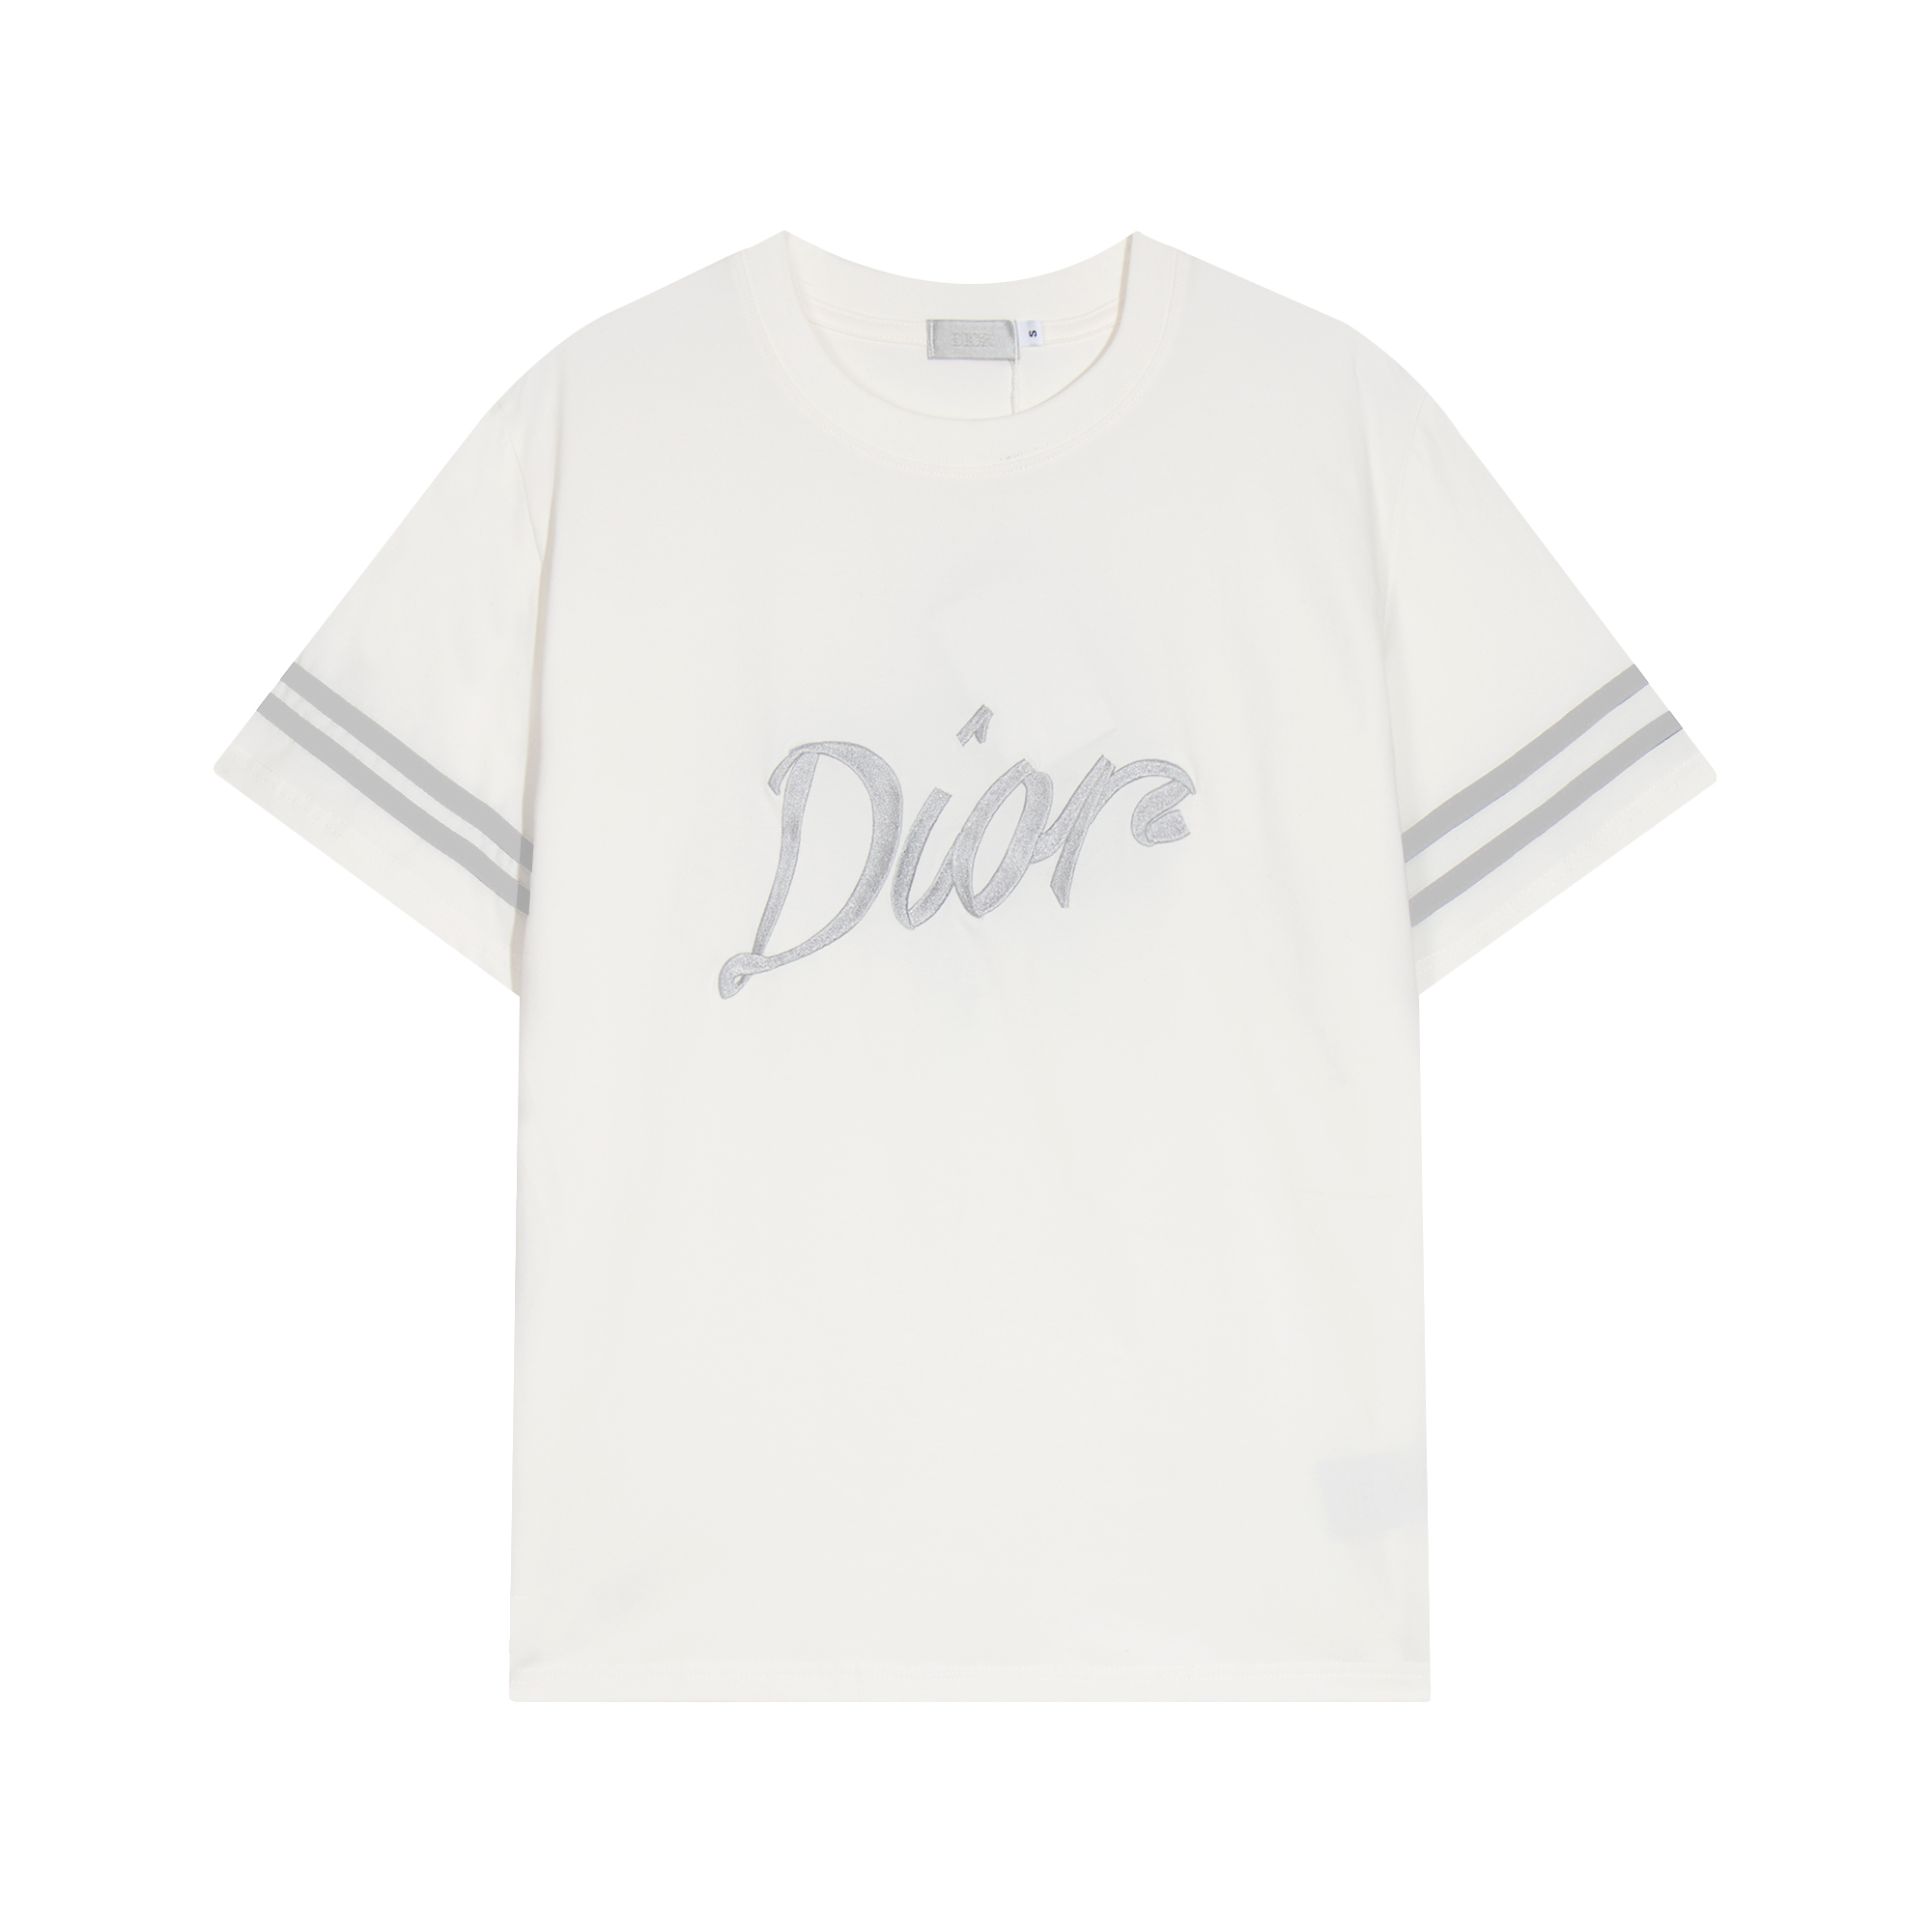 Dior Short Sleeve T Shirts Unisex # 264485